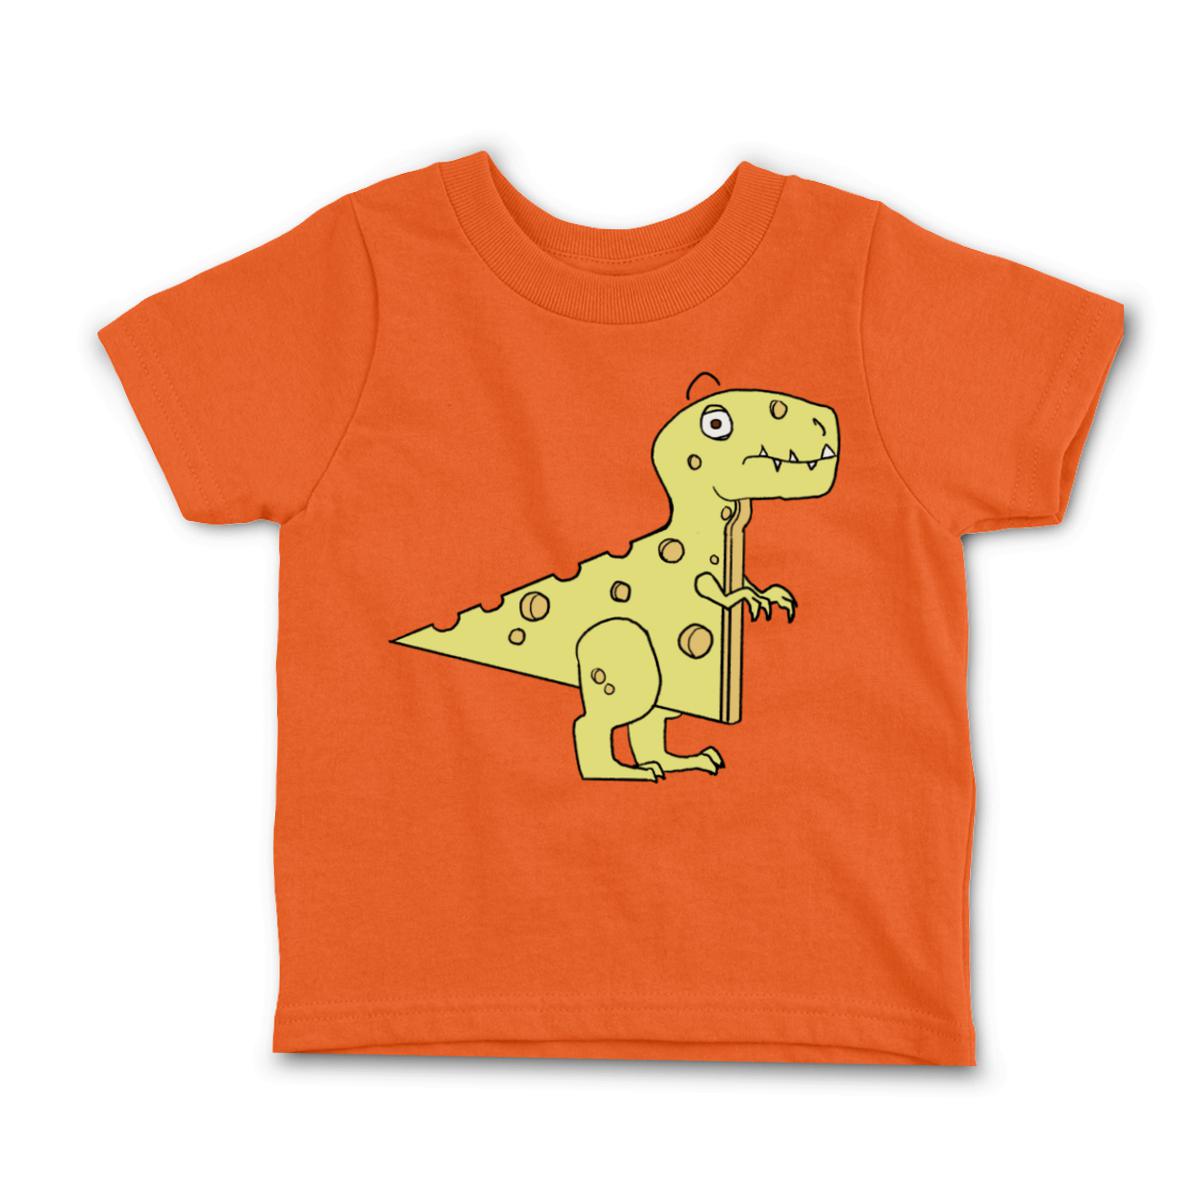 Cheeseosaurus Rex Infant Tee 12M orange